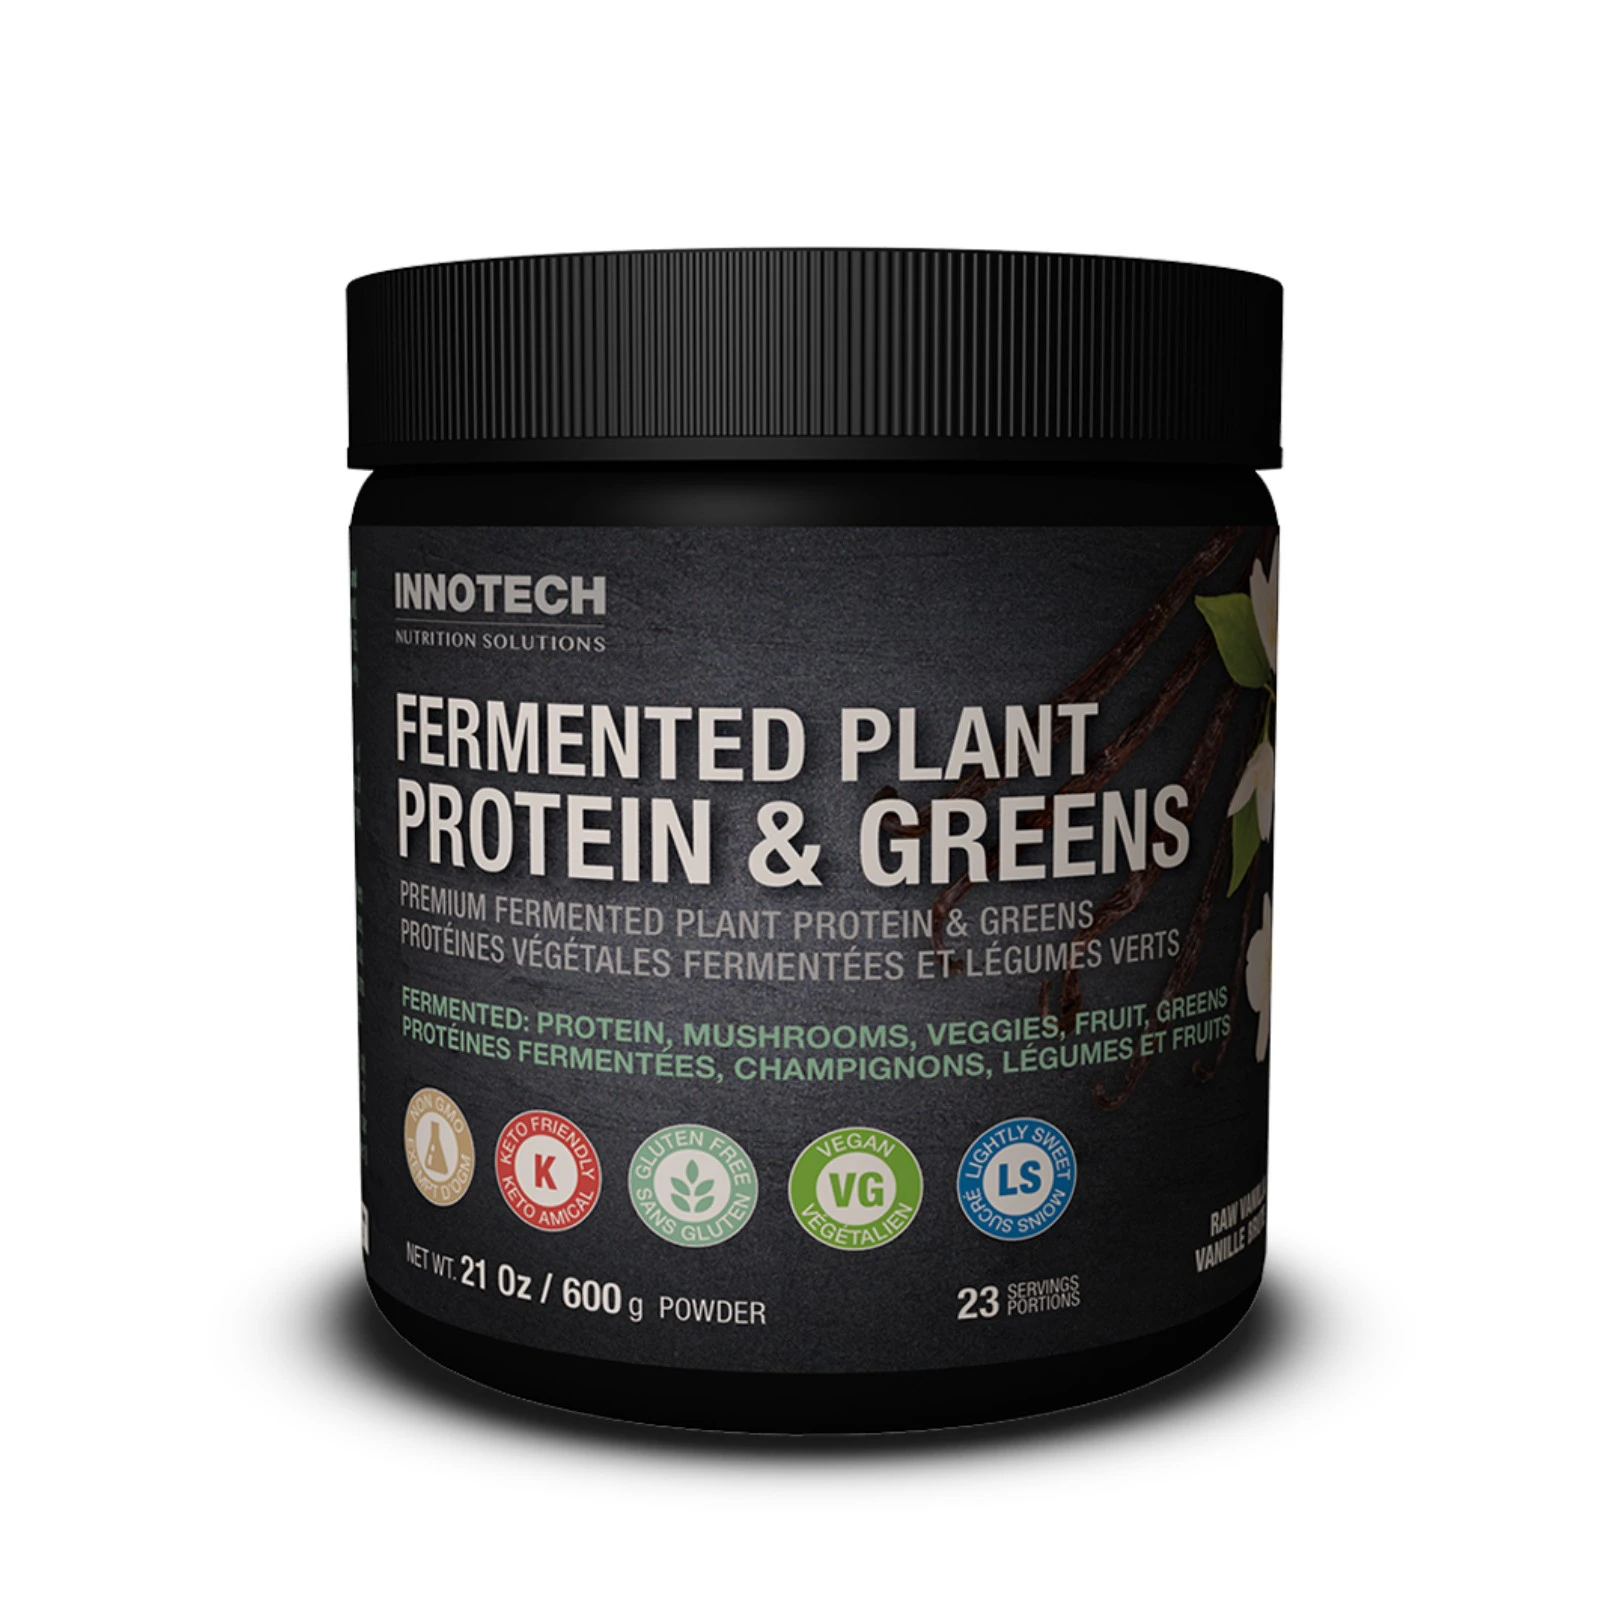 Protein & thực phẩm xanh lên men Innotech Nutrition Solutions Fermented Plant Protein & Greens 10